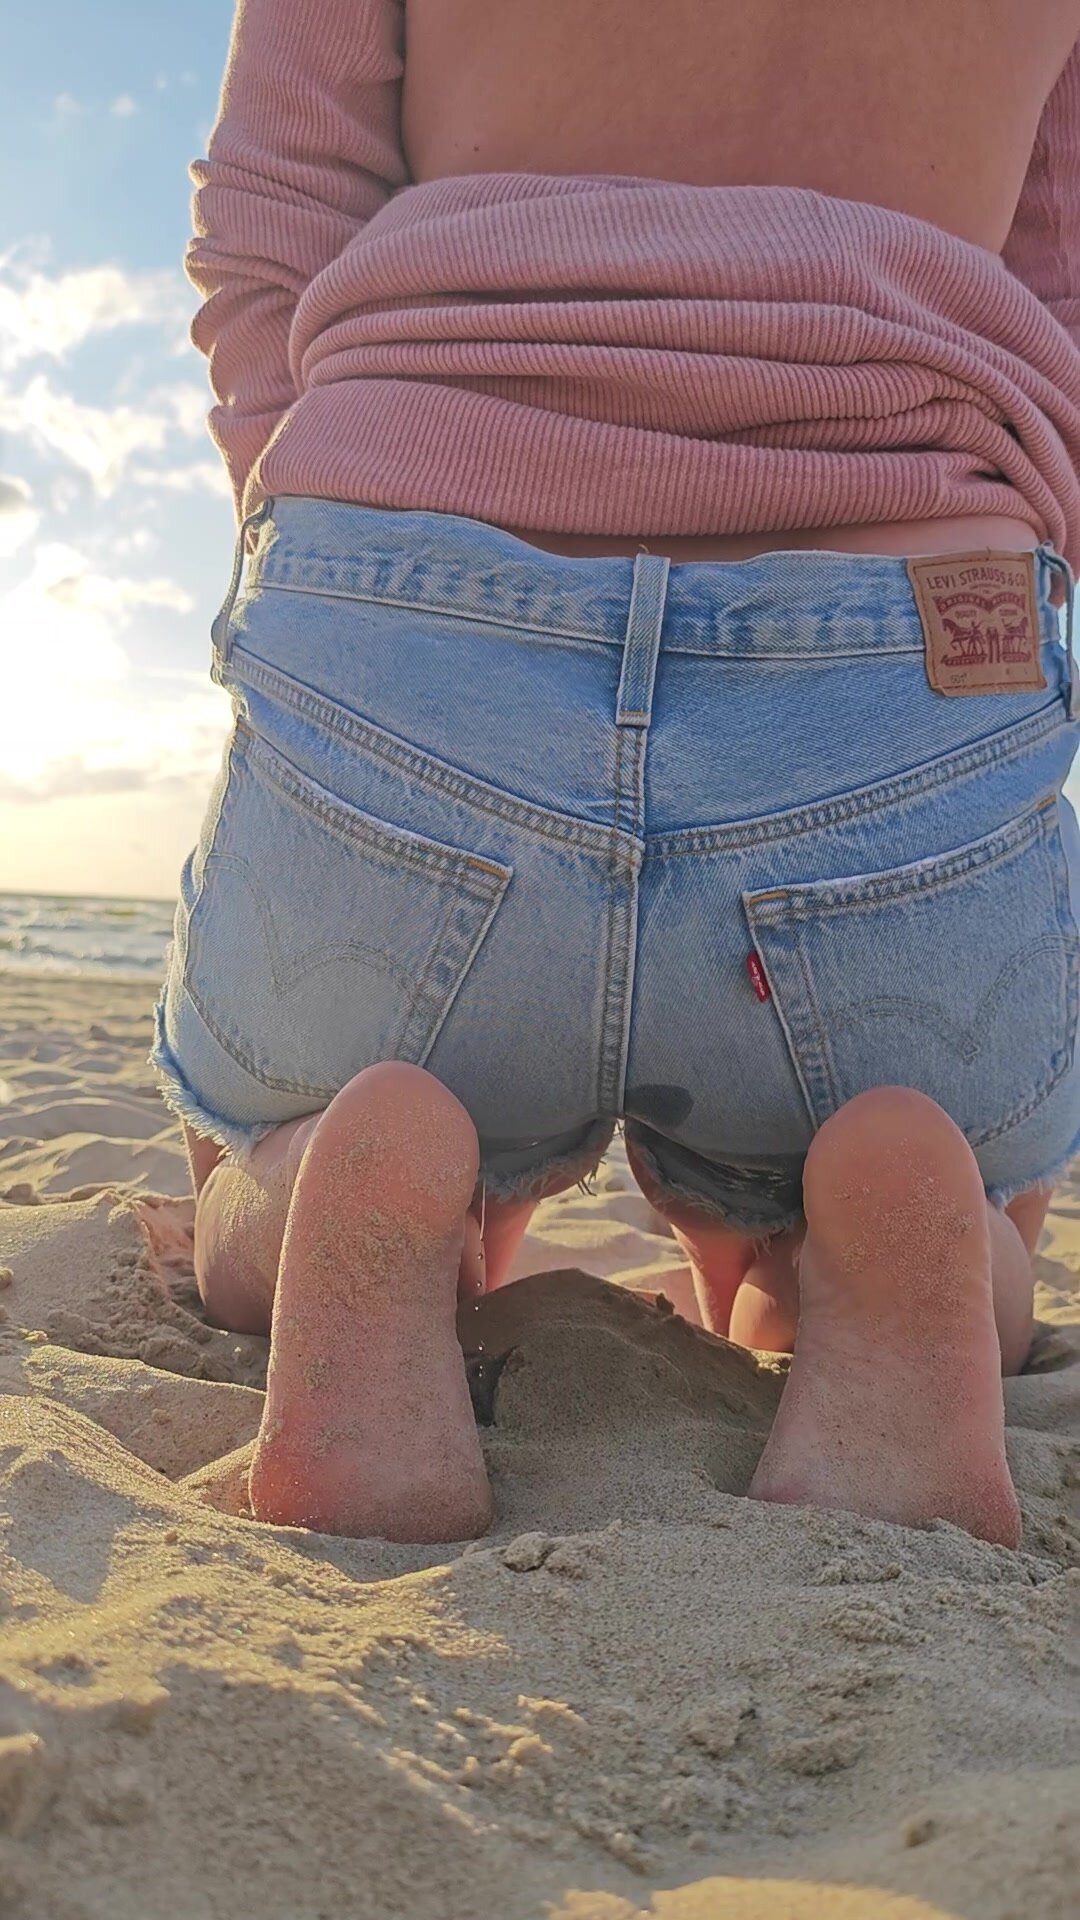 jeans pee on the beach